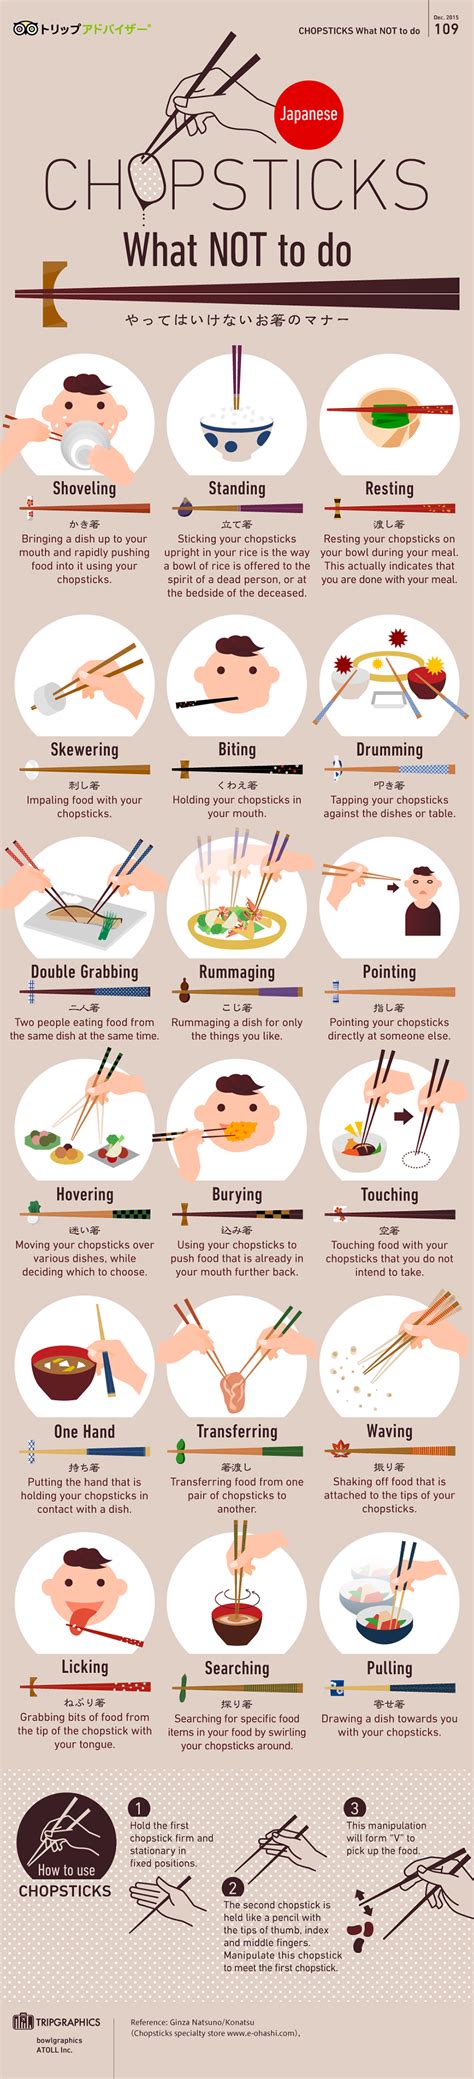 chopsticks plyvine catering